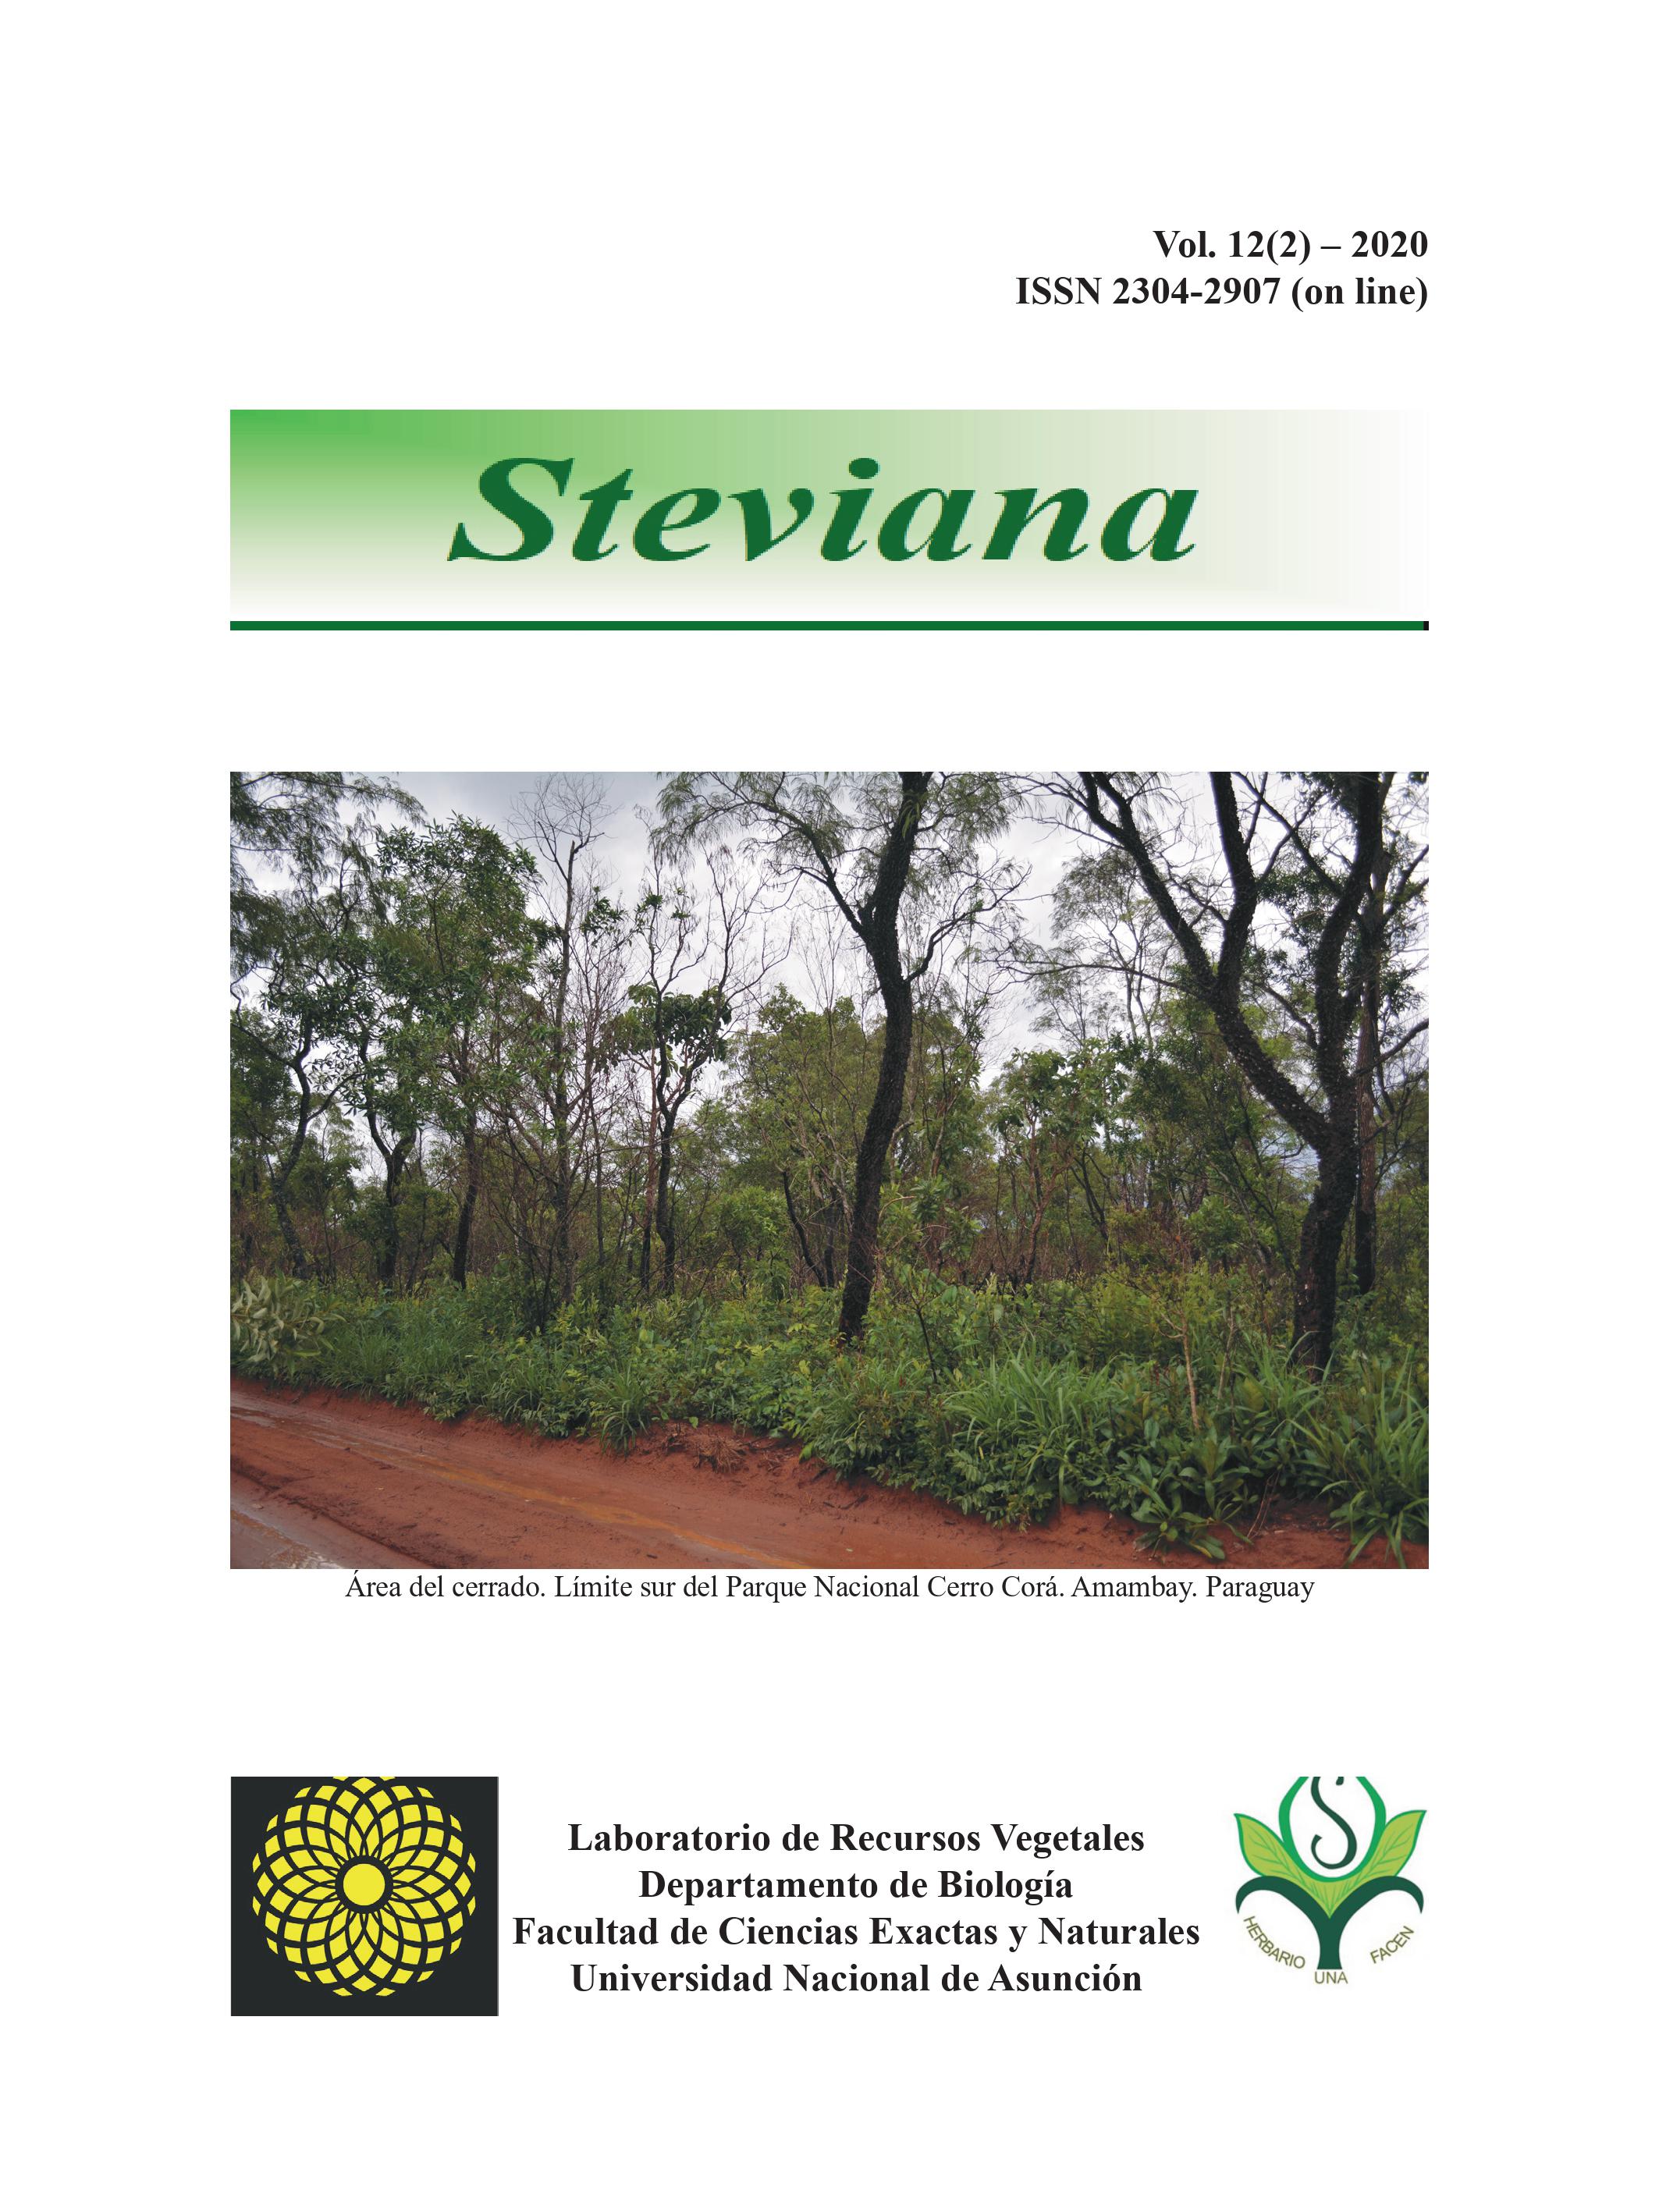 					Ver Vol. 12 Núm. 2 (2020): Steviana
				